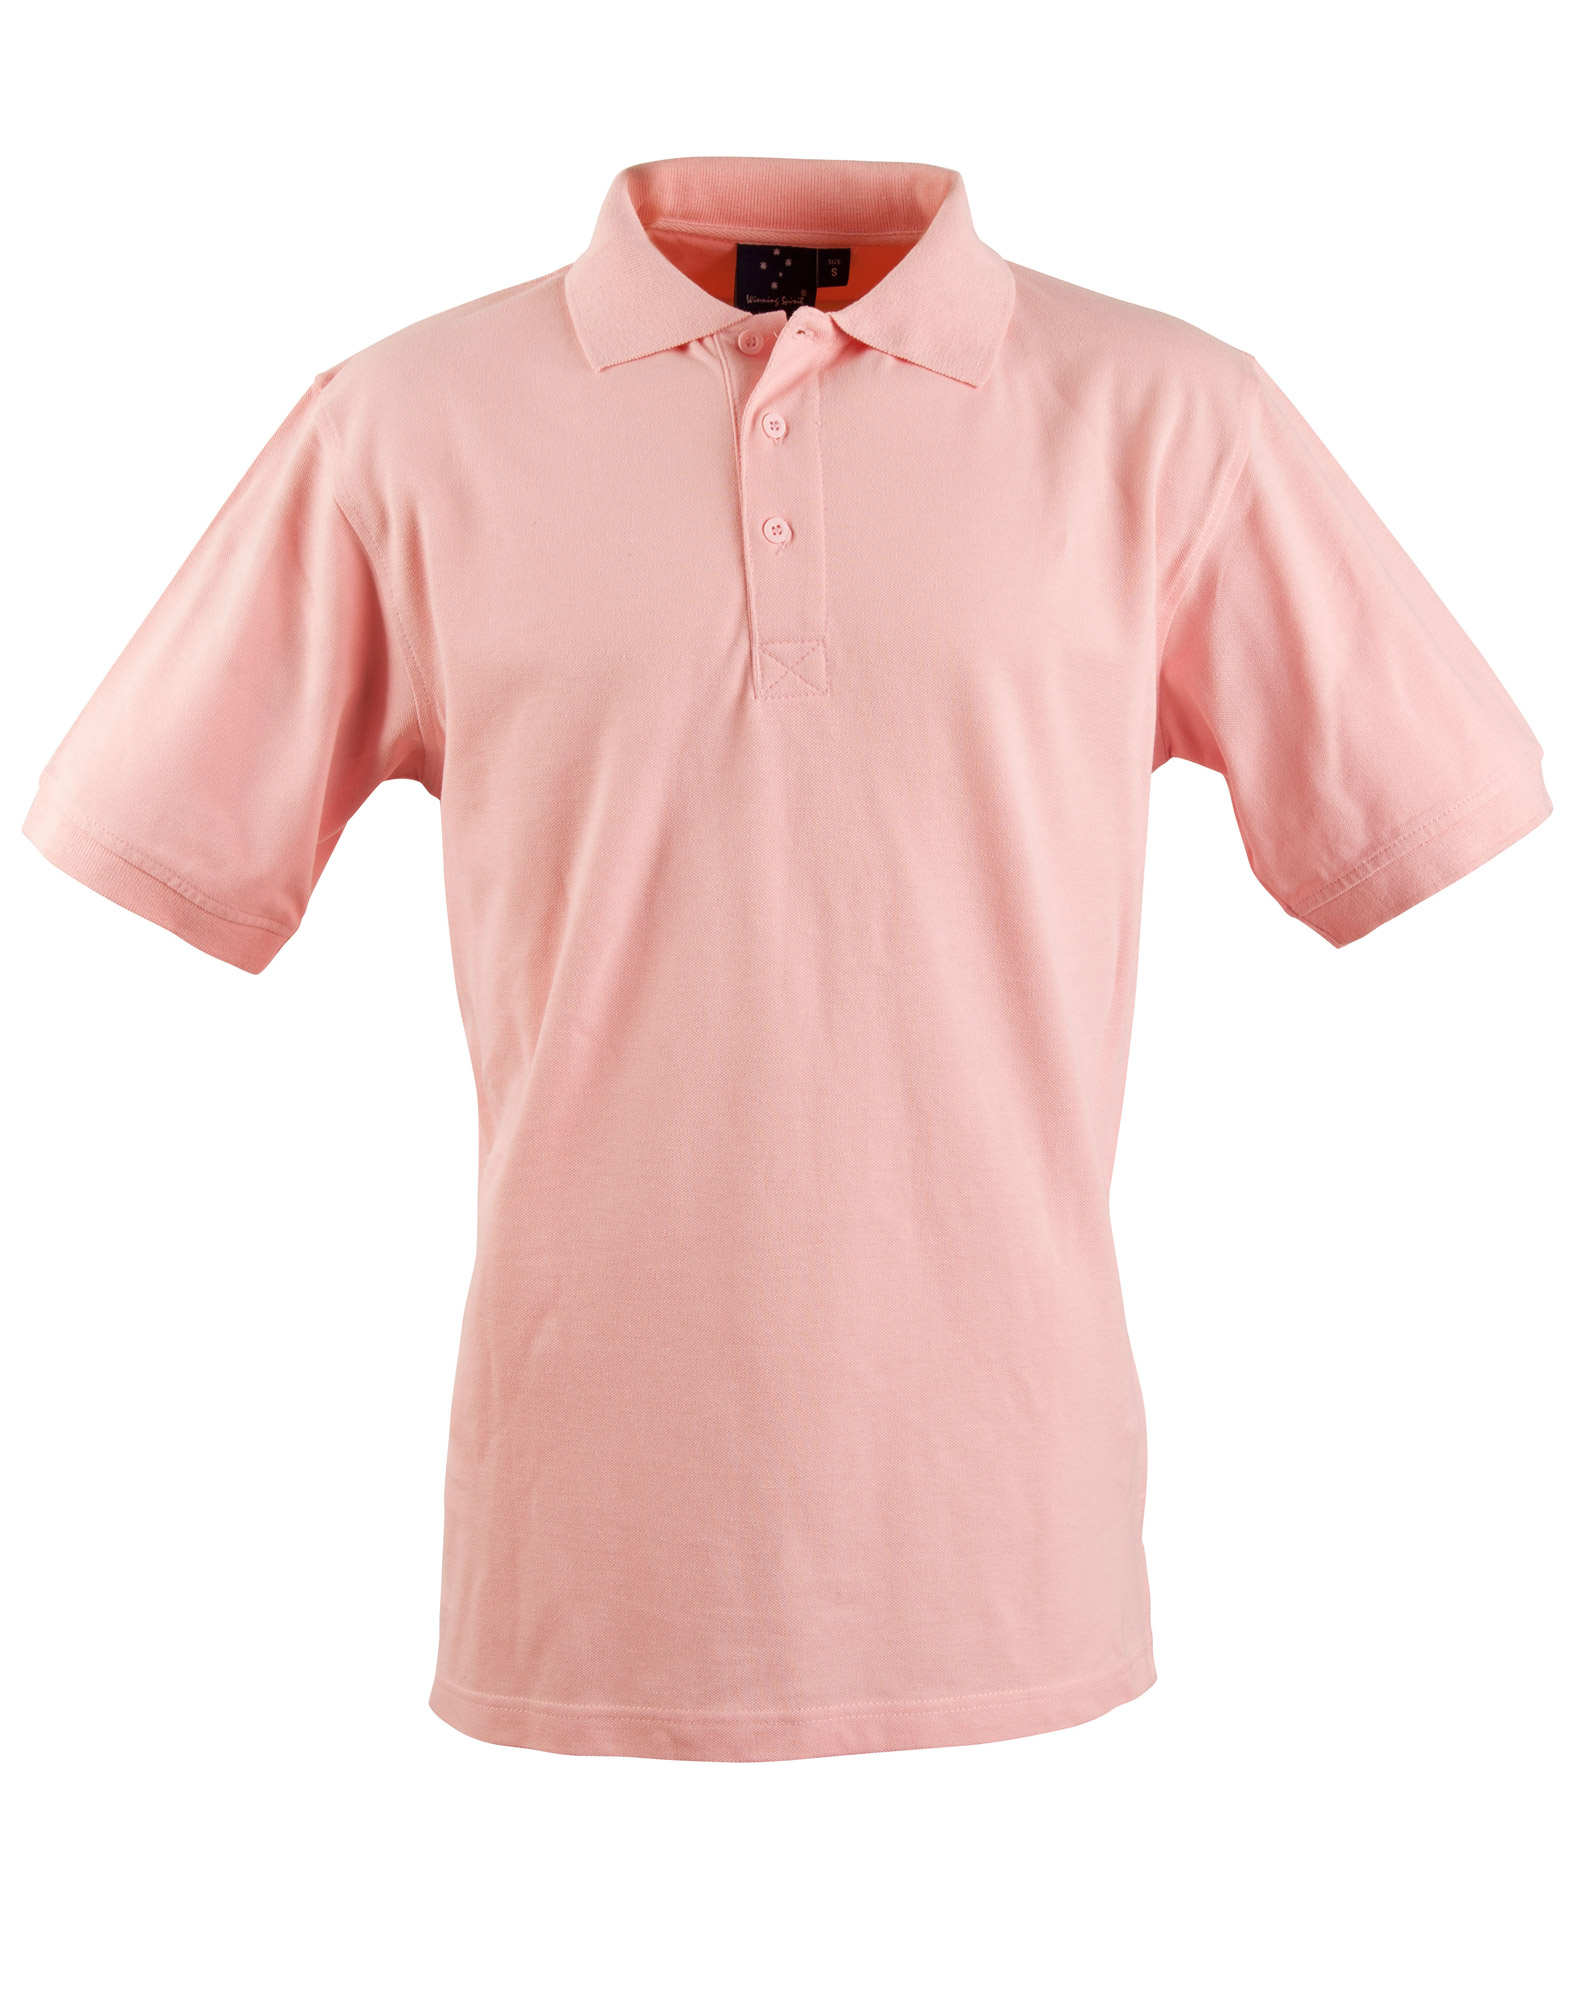 Men's and Women's Longbeach Cotton Short Sleeve Polo - Light Pink ...